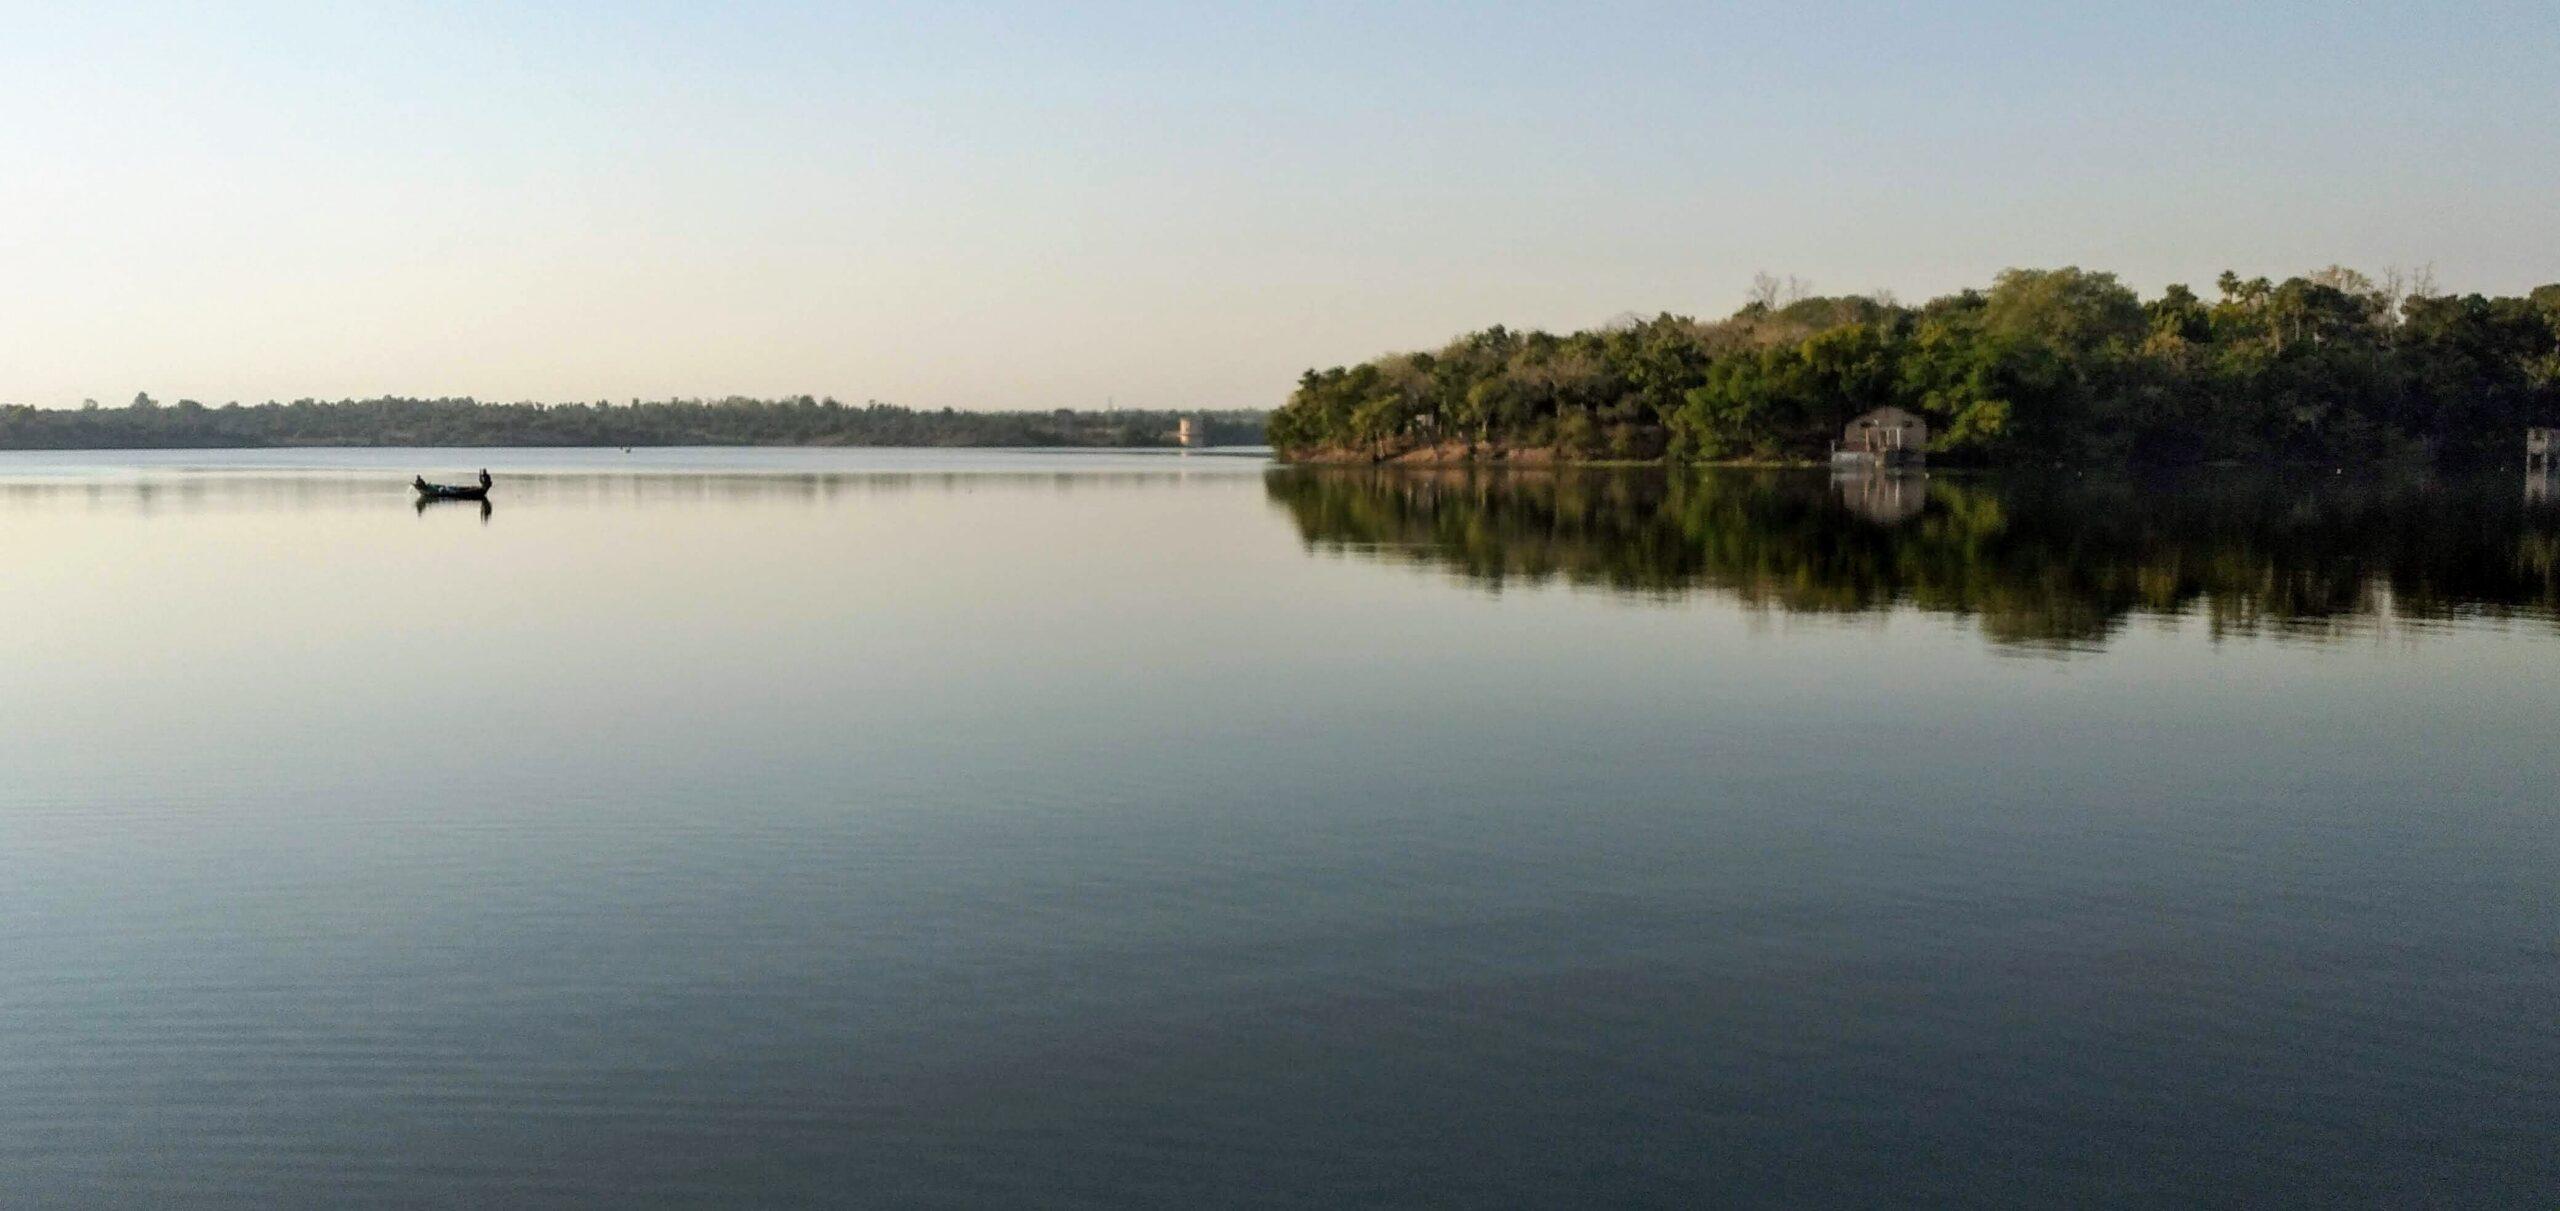 ambazari lake: Best places to visit in Nagpur Maharashtra tourism